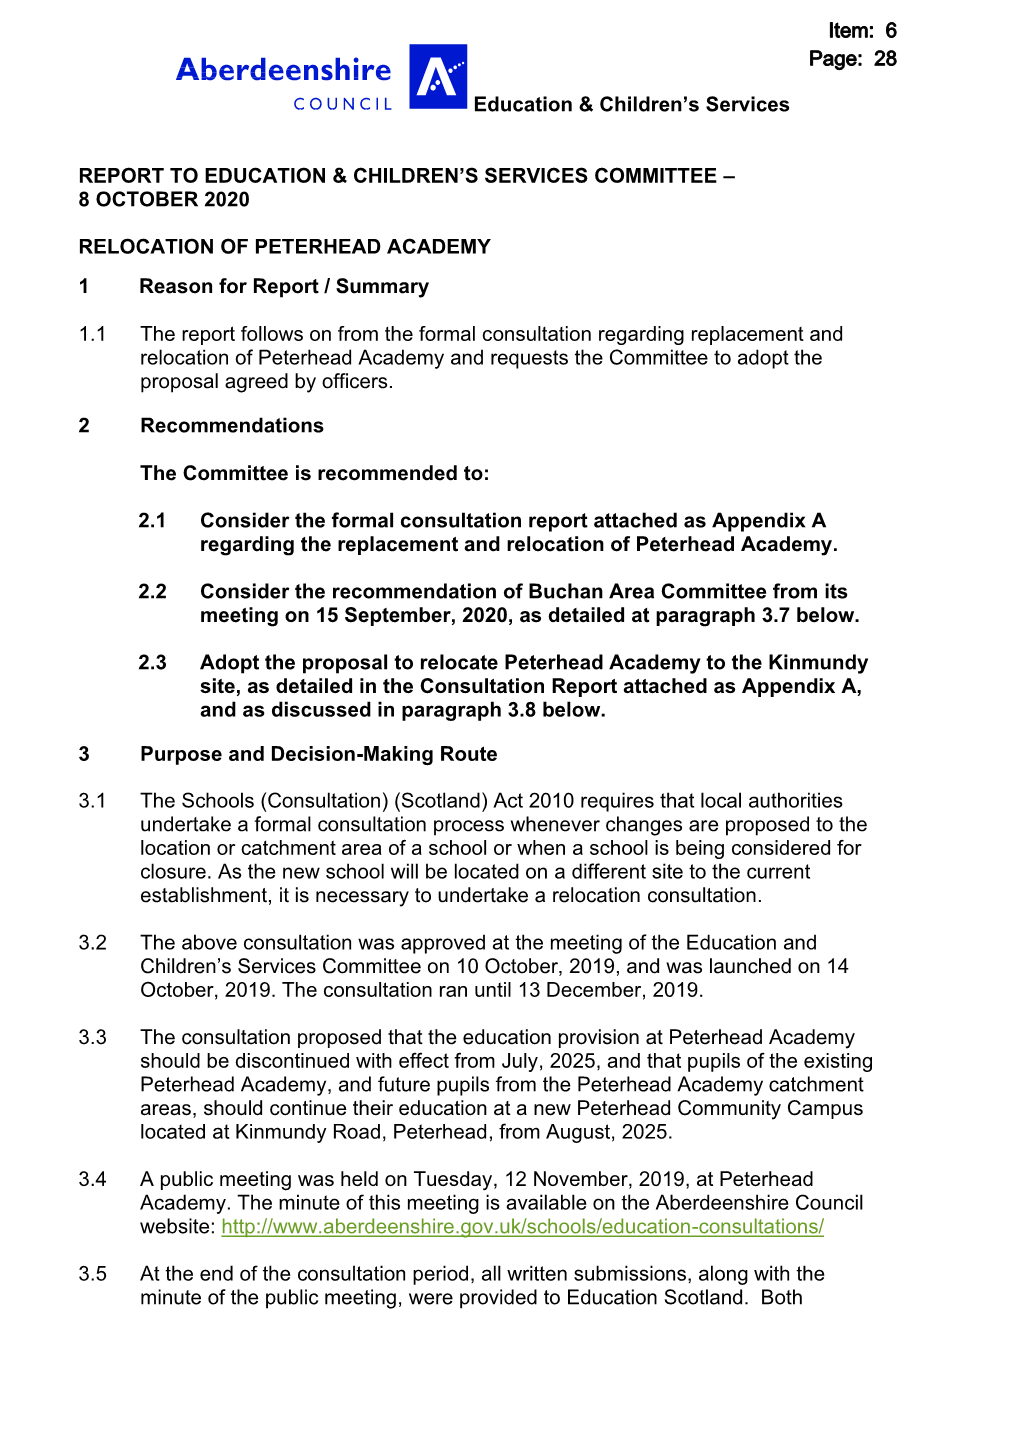 6. Relocation of Peterhead Academy